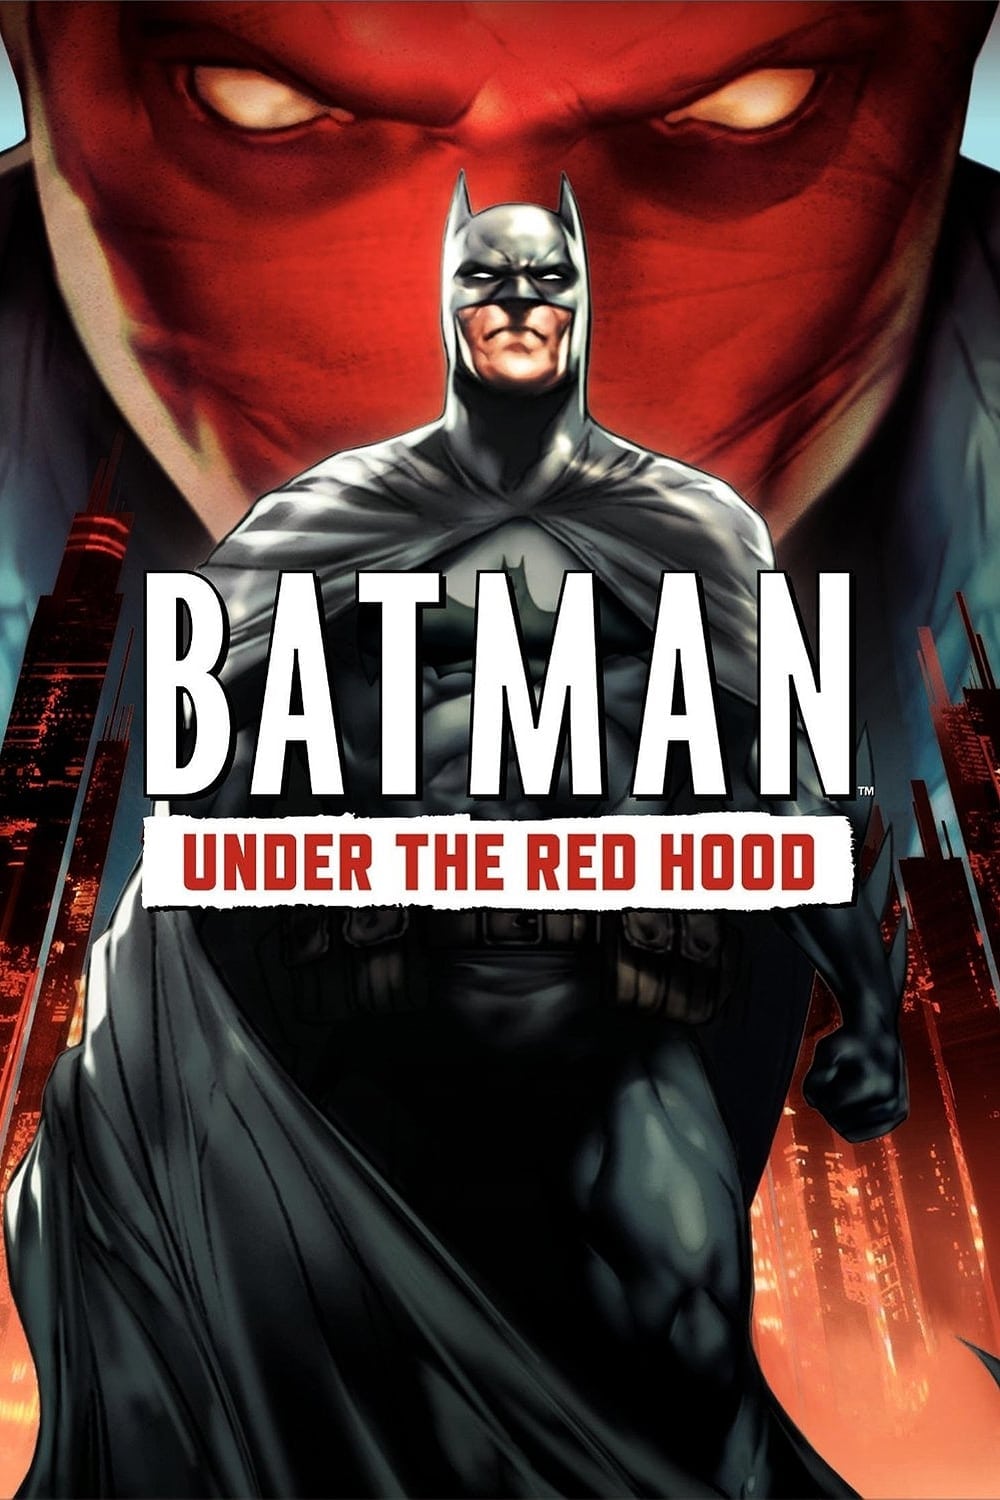 Batman: Under the Red Hood [HD] (2010)